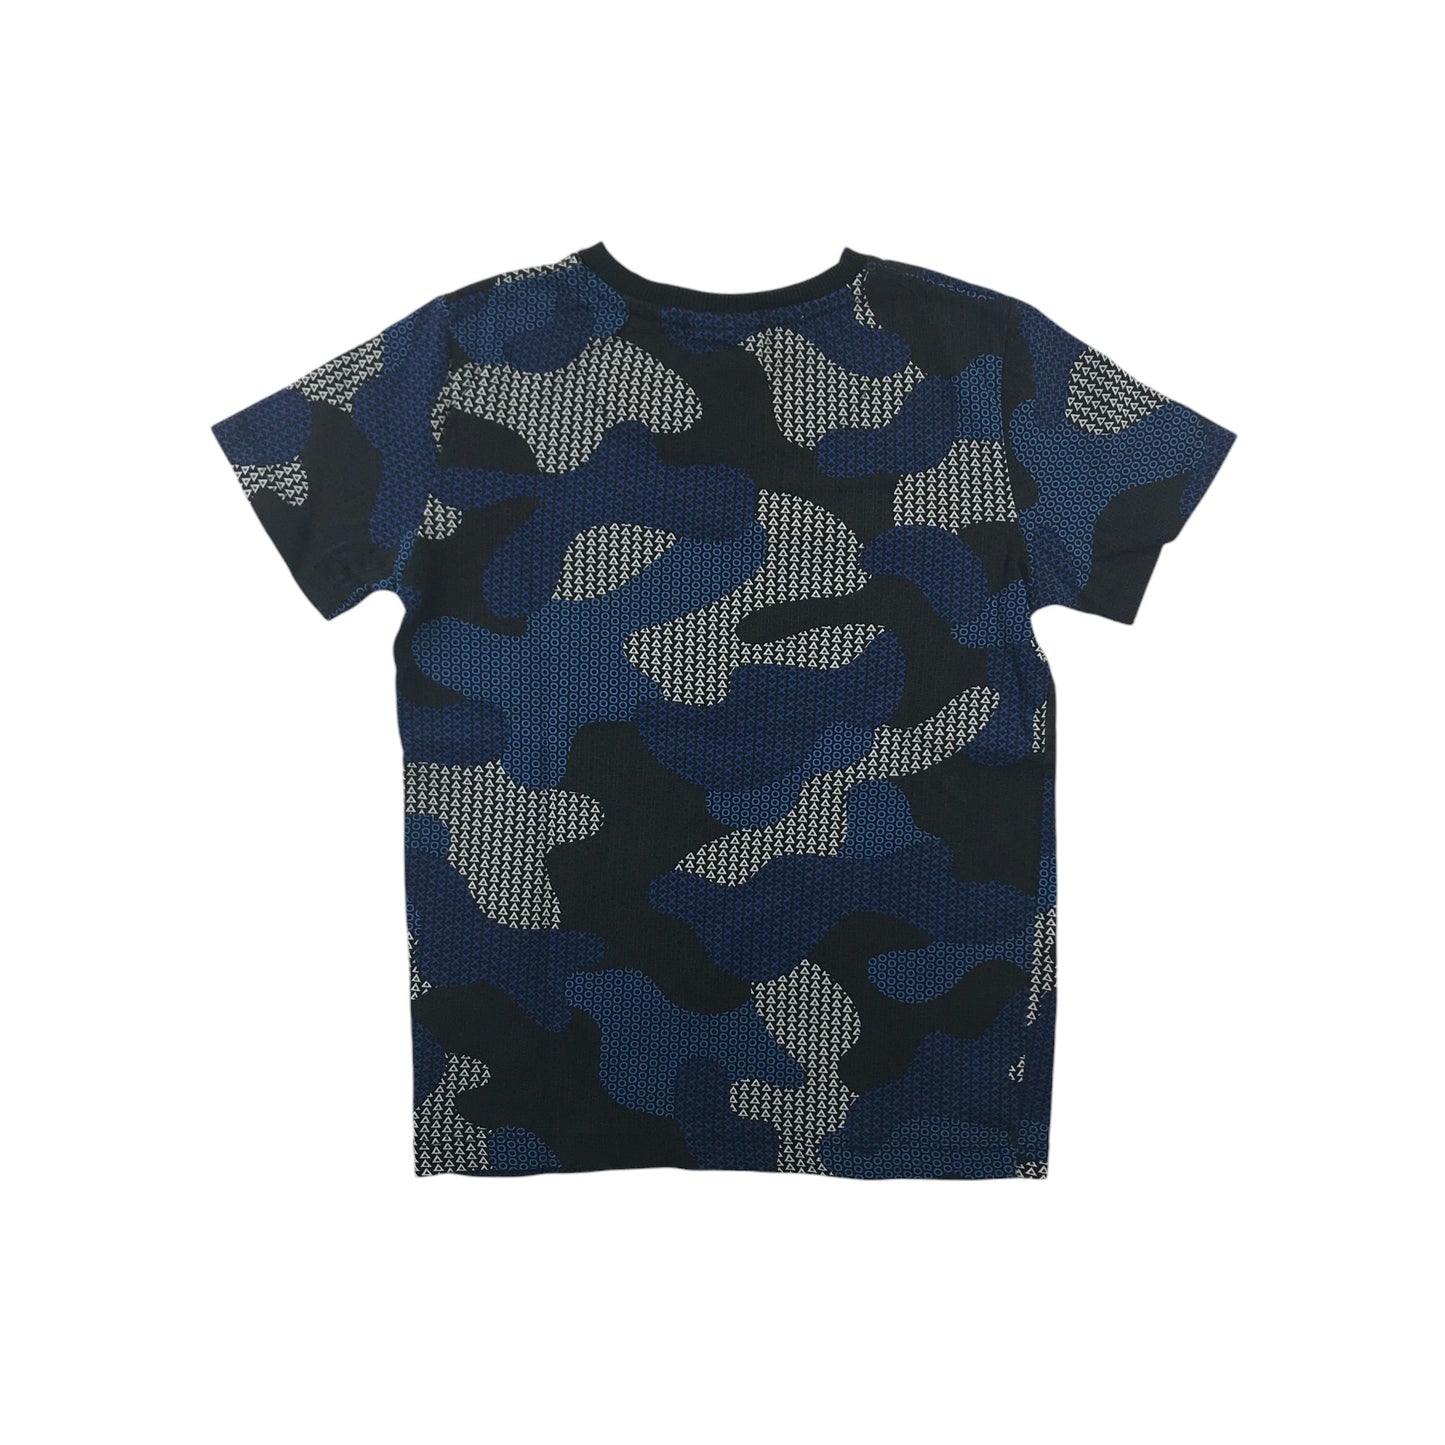 Next T-shirt 7 years Blue and Navy Camo PlayStation Logo